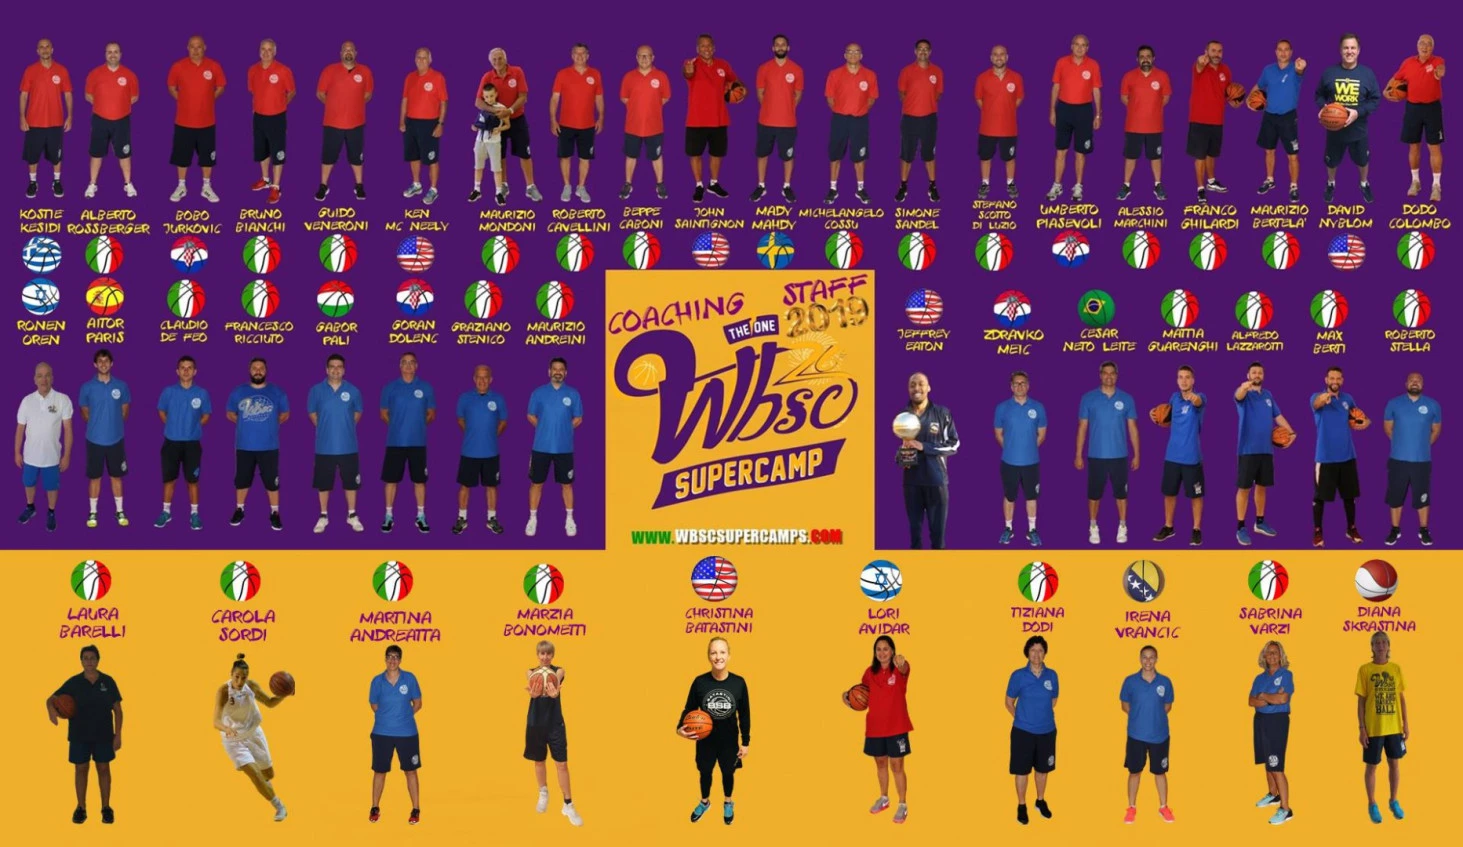 26° WBSC Supercamp Italia 2019 – International Basketball School “Claudio Papini” staff!!